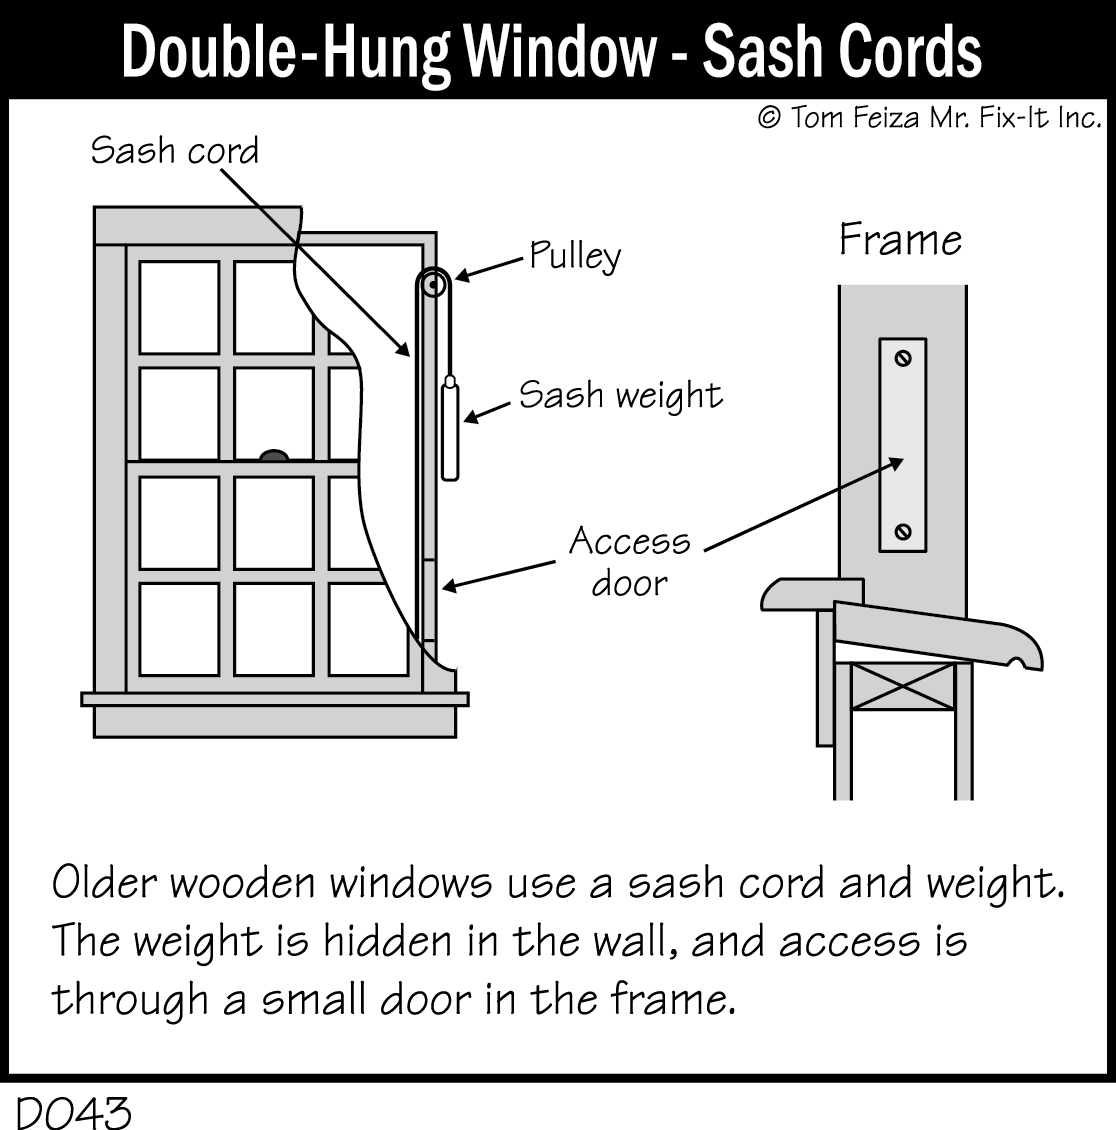 D043 - Double-Hung Window - Sash Cords - Covered Bridge